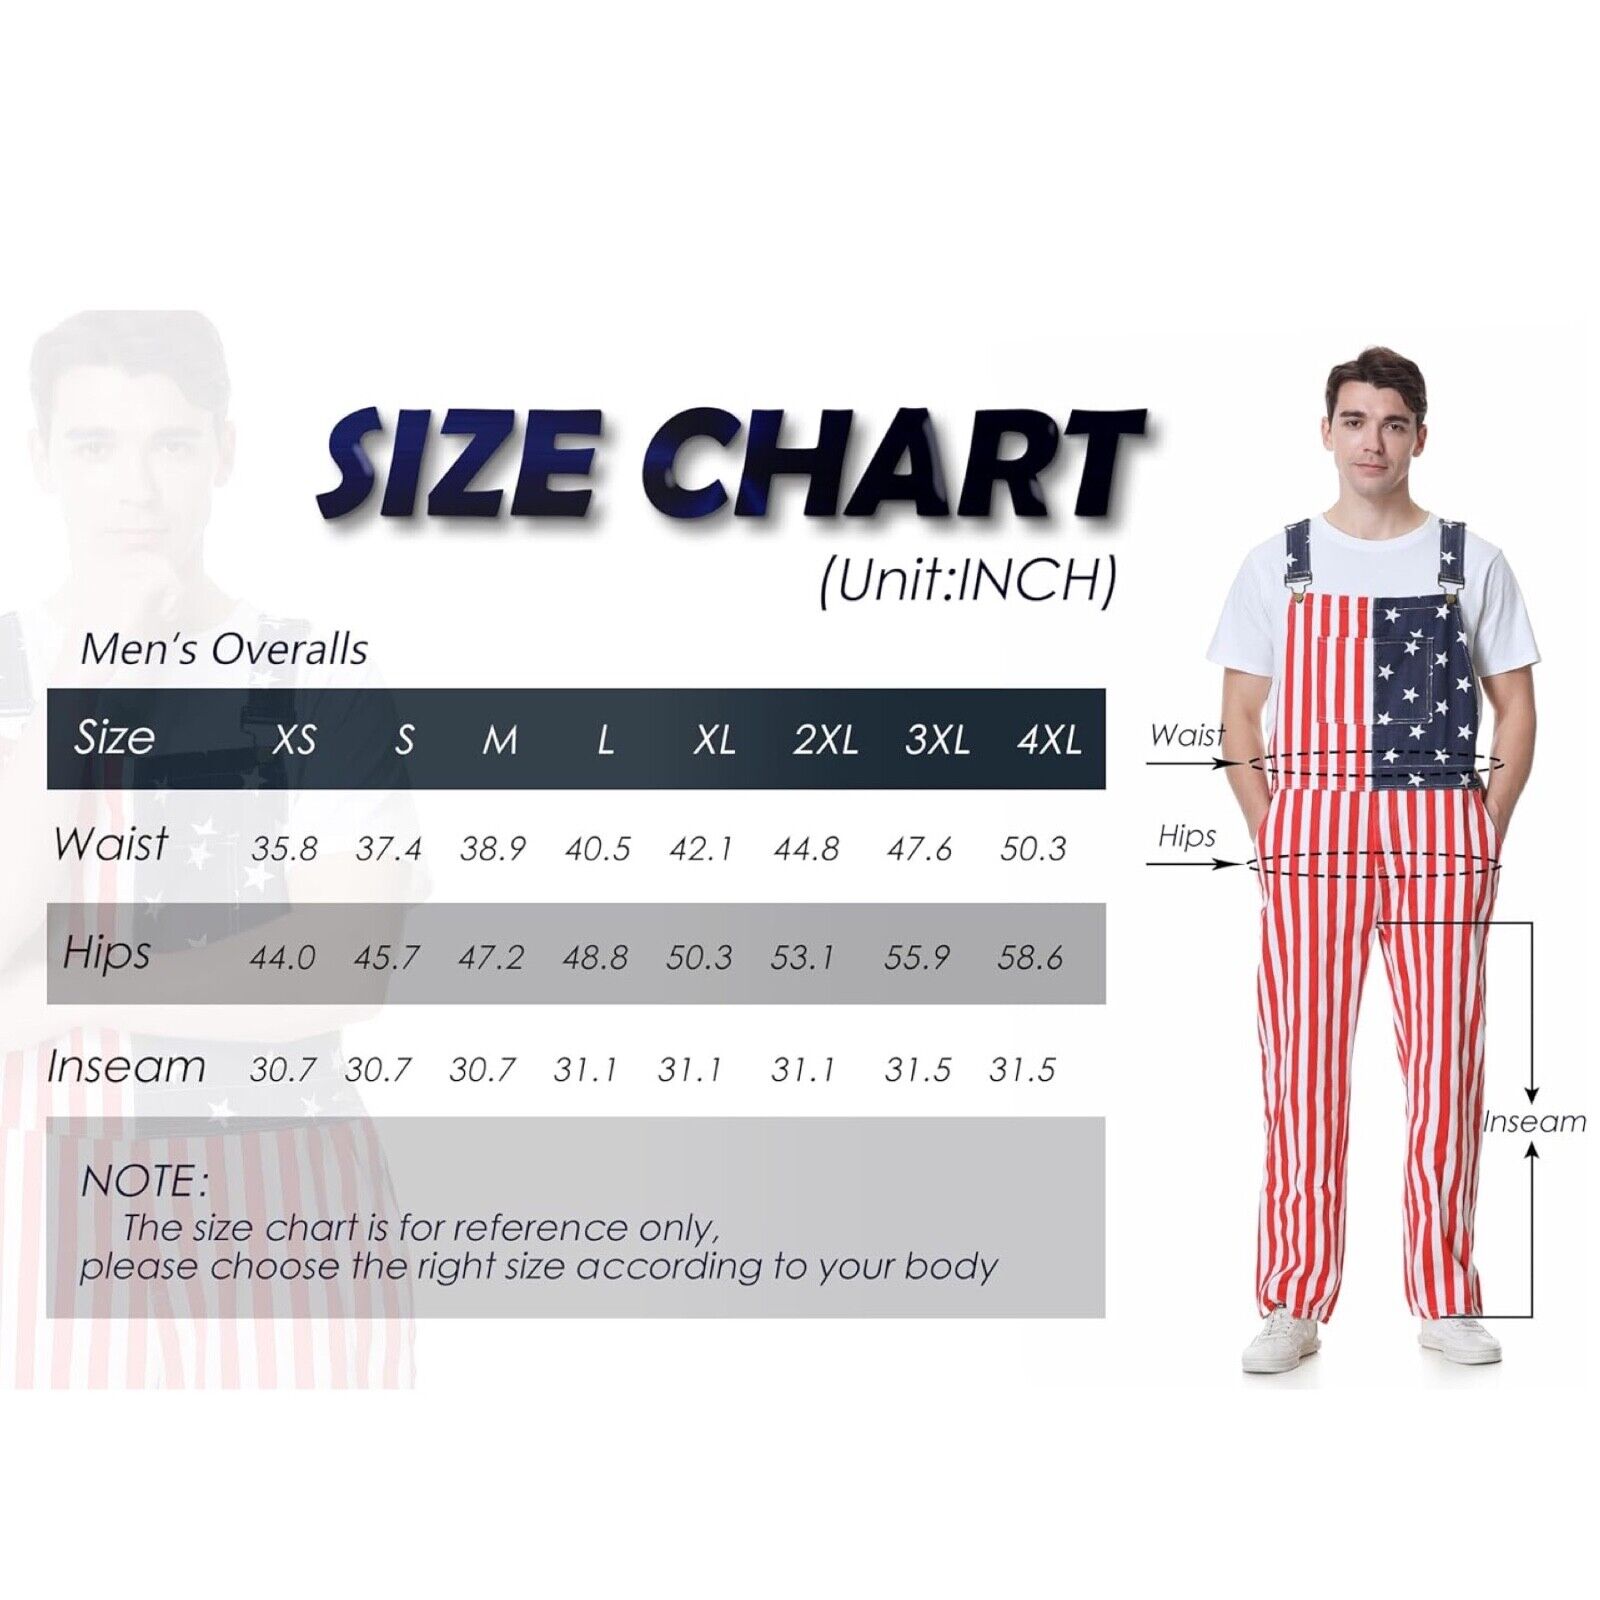 Mens American Flag Denim Overalls